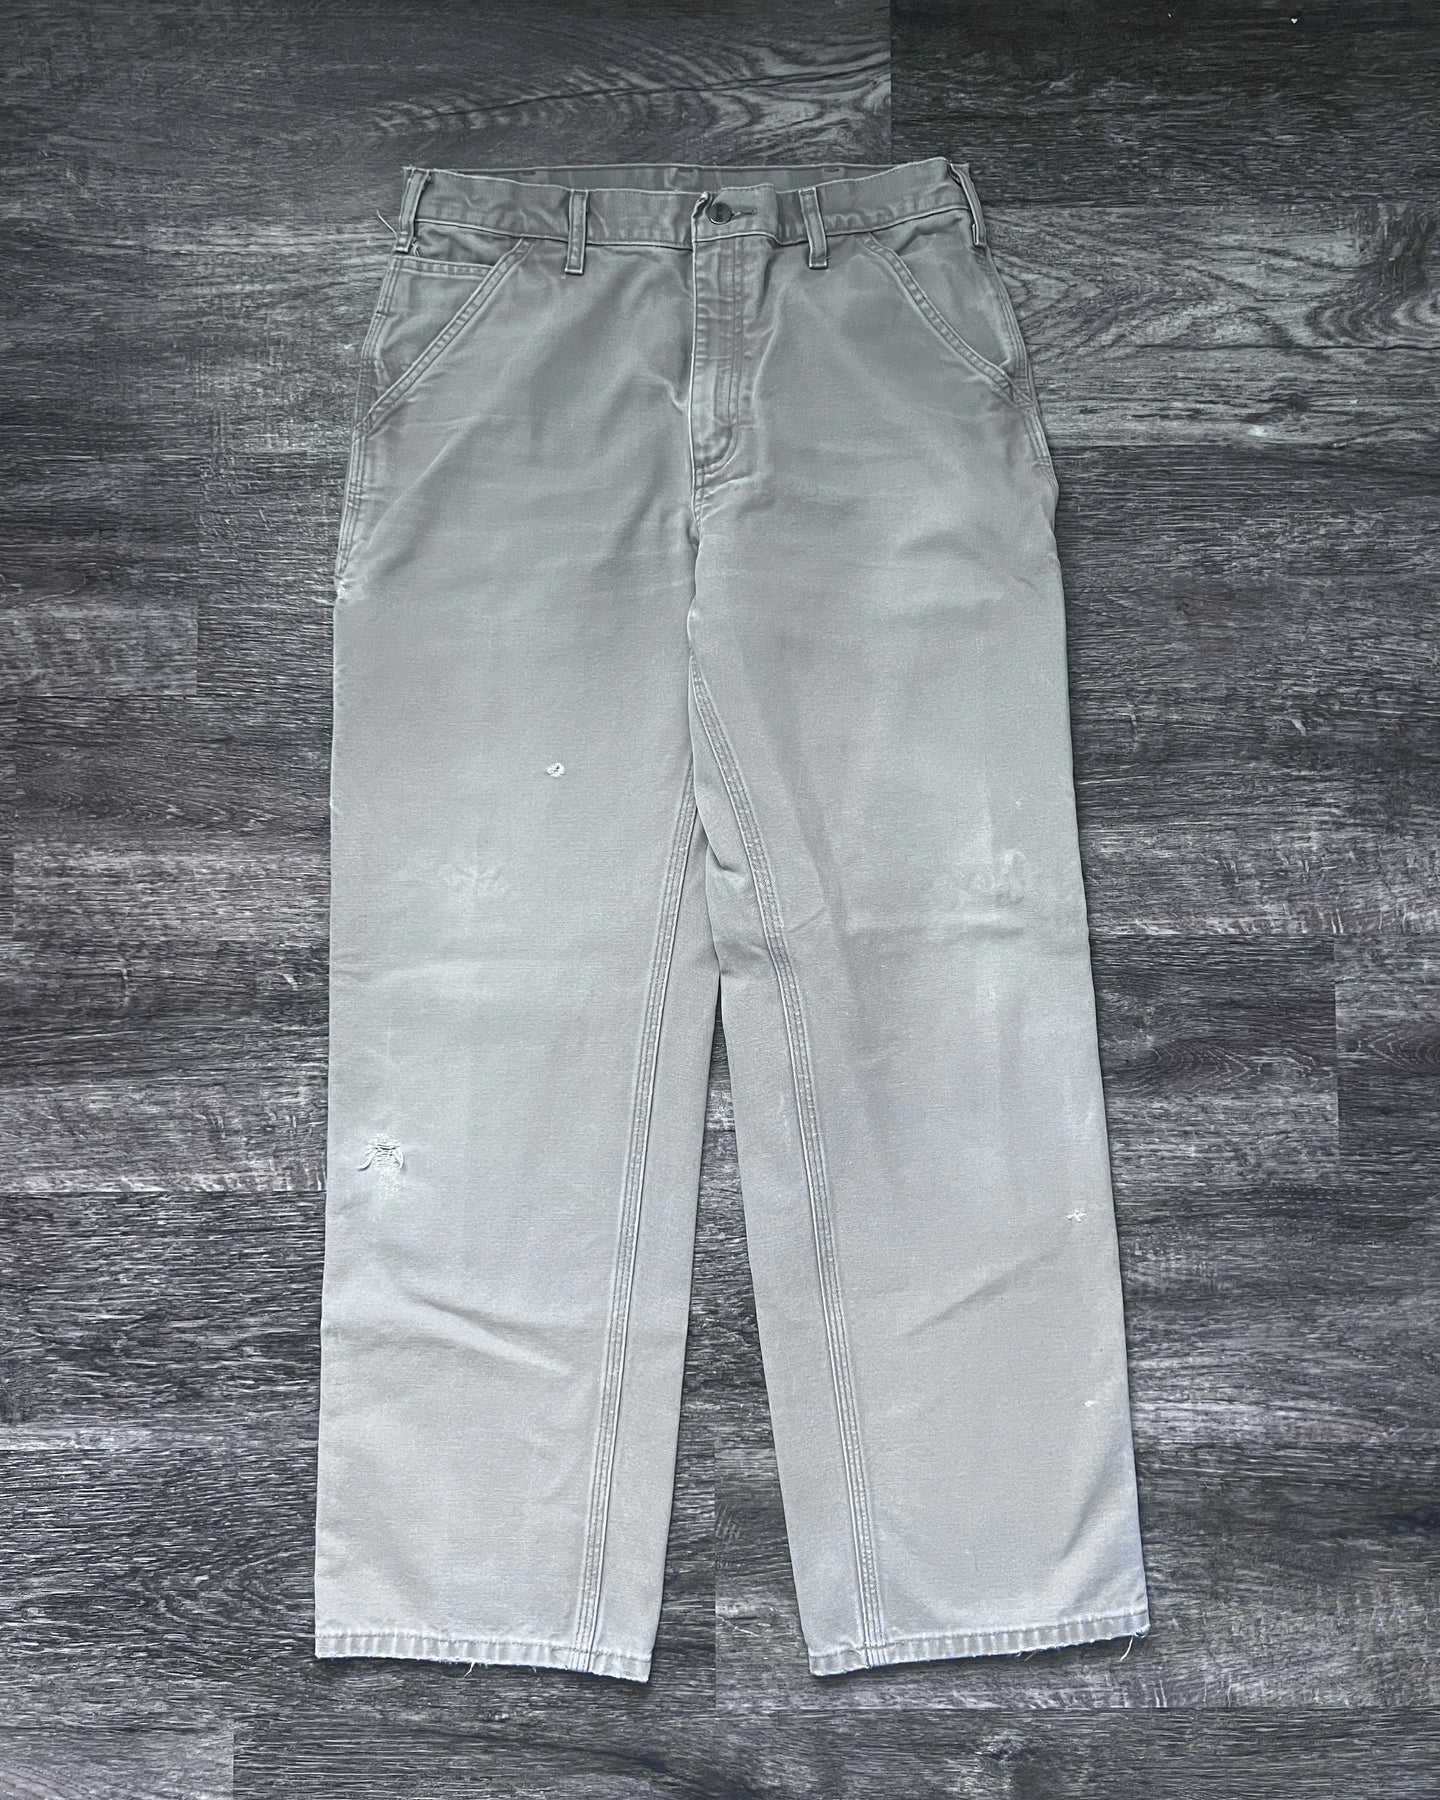 Carhartt Stone Grey Carpenter Pants - Size 33 x 31